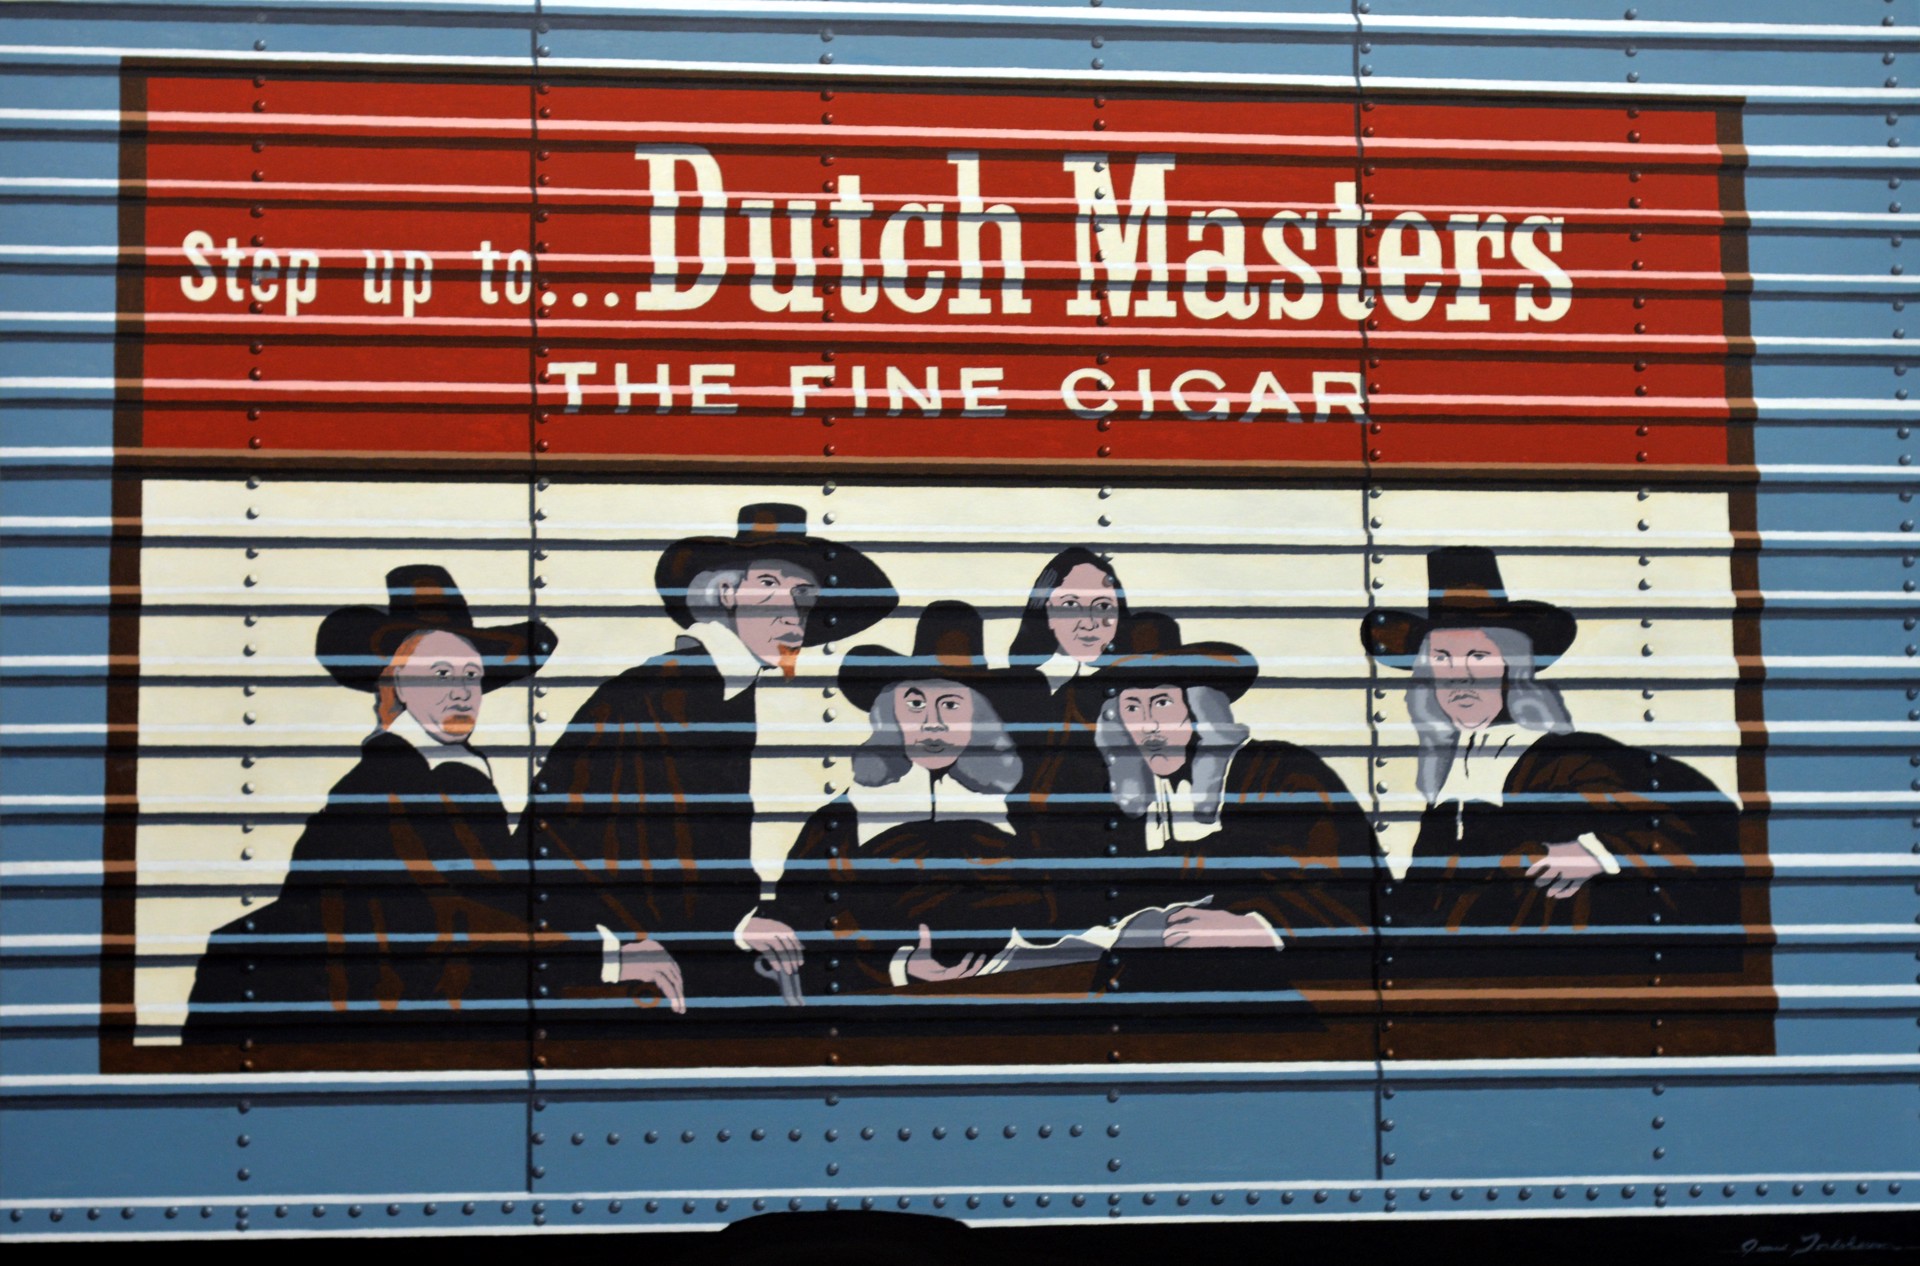 Dutch Masters by James Torlakson